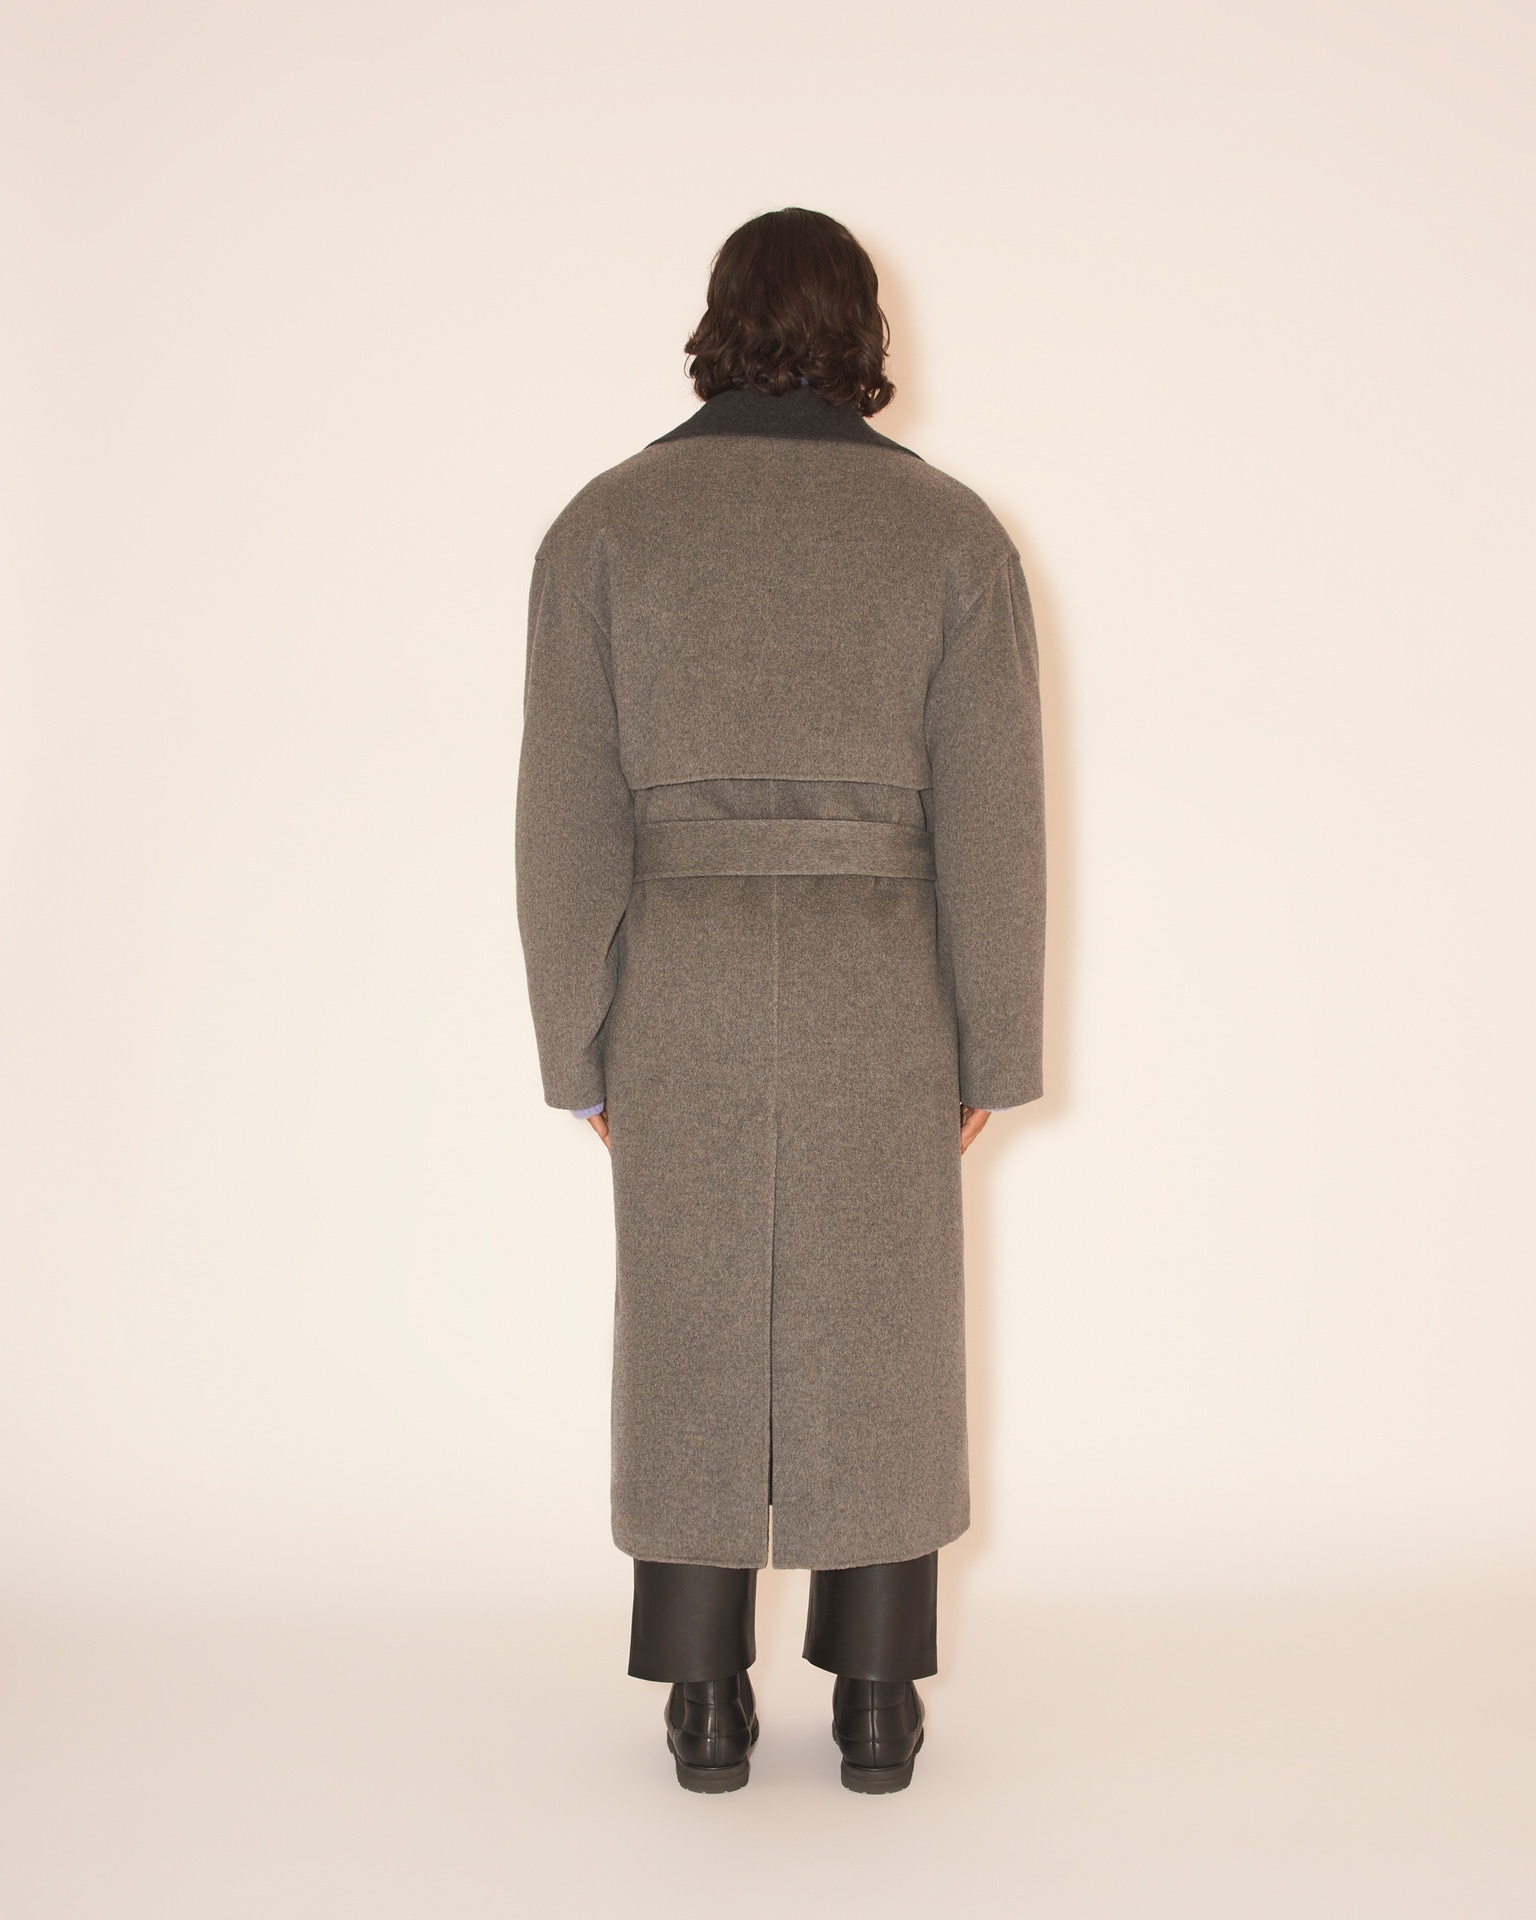 KENNO - Belted coat - Grey/charcoal - 5